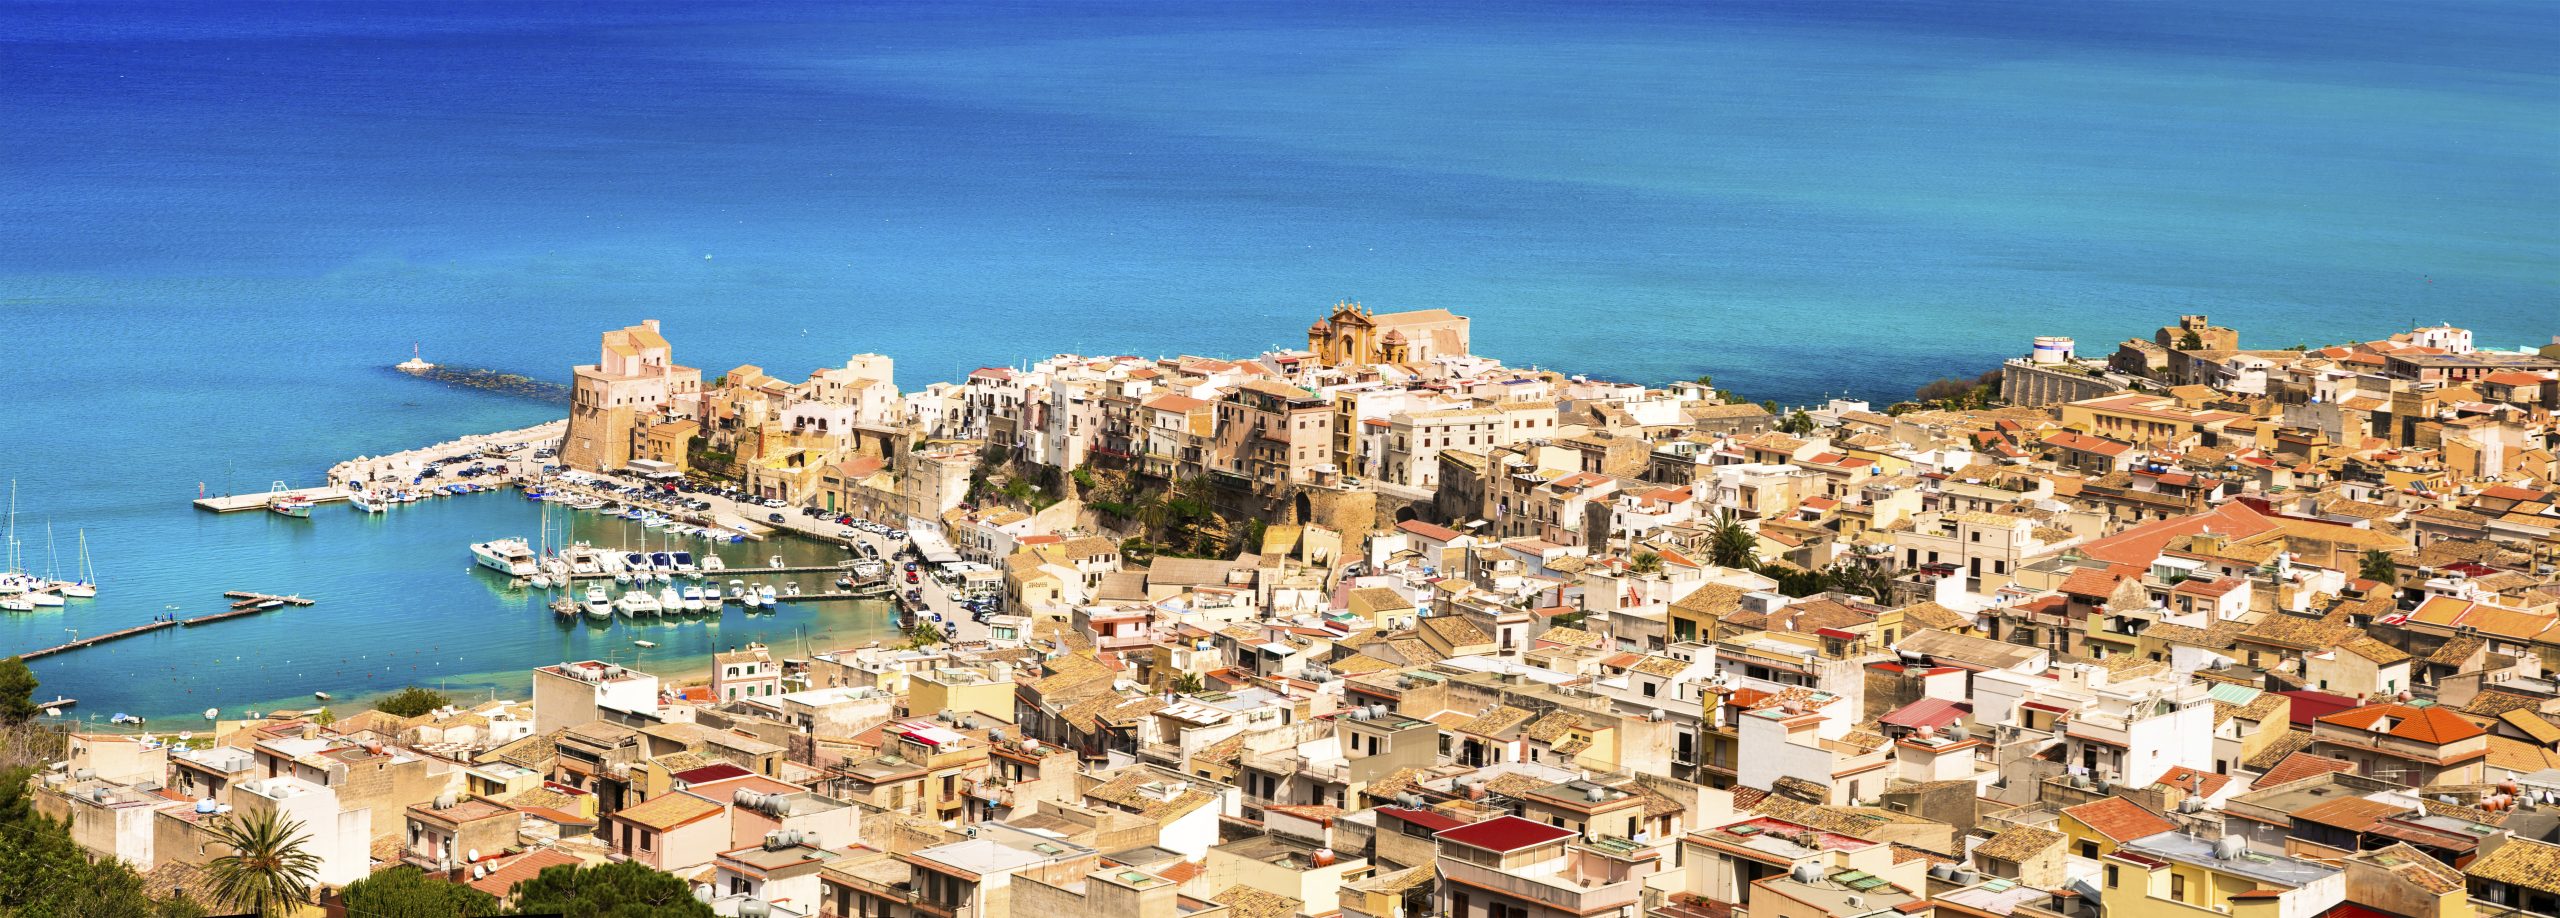 Castellammare del Golfo - beautiful coastal town in Sicily, Ital